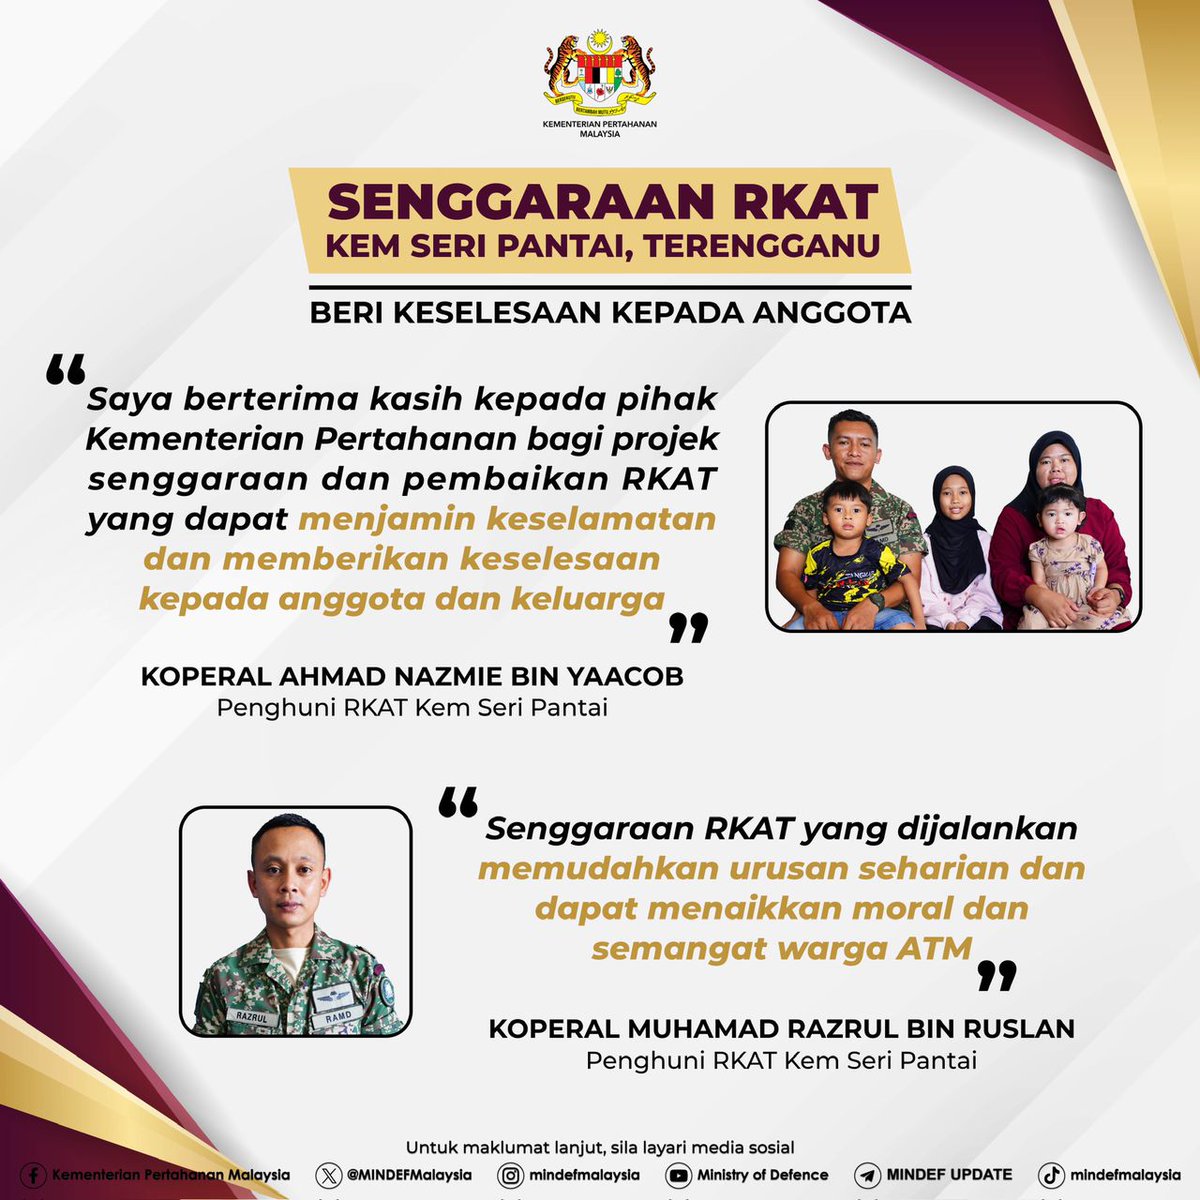 Penyelenggaraan RKAT Kem Seri Pantai, Terengganu merupakan usaha Kementerian Pertahanan untuk menjaga kesejahteraan warganya serta mampu menaikkan moral dan semangat warga ATM.

#MindefMalaysia
#MindefUpdate
#KebajikanAnggotaATM
#RKAT